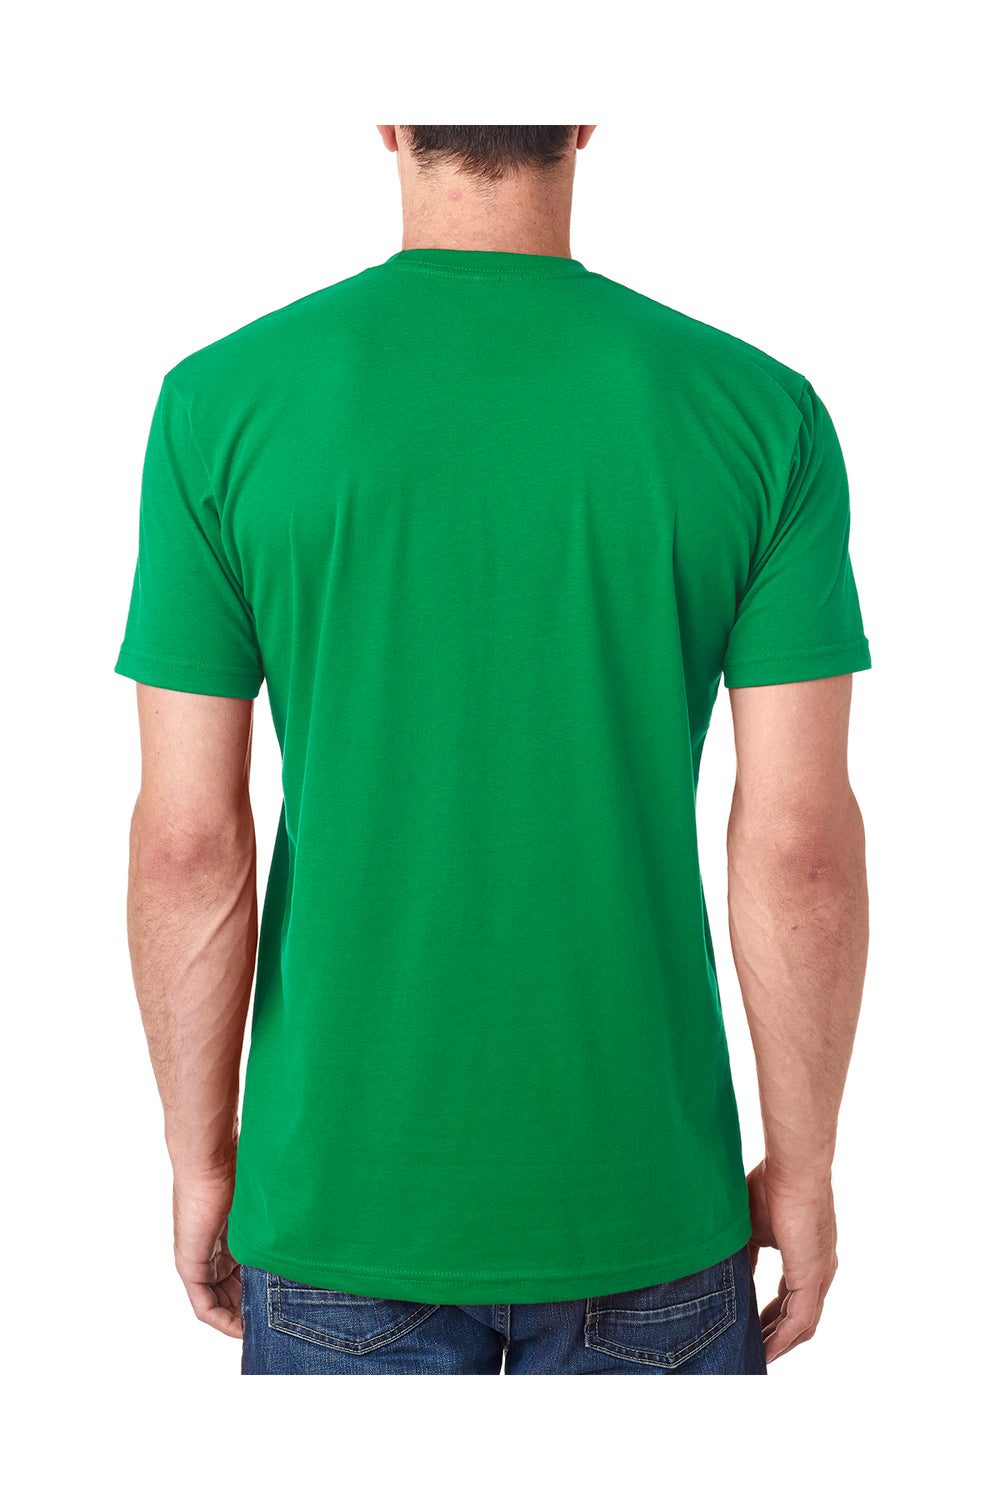 Next Level 6410 Mens Sueded Jersey Short Sleeve Crewneck T-Shirt Envy Green Back